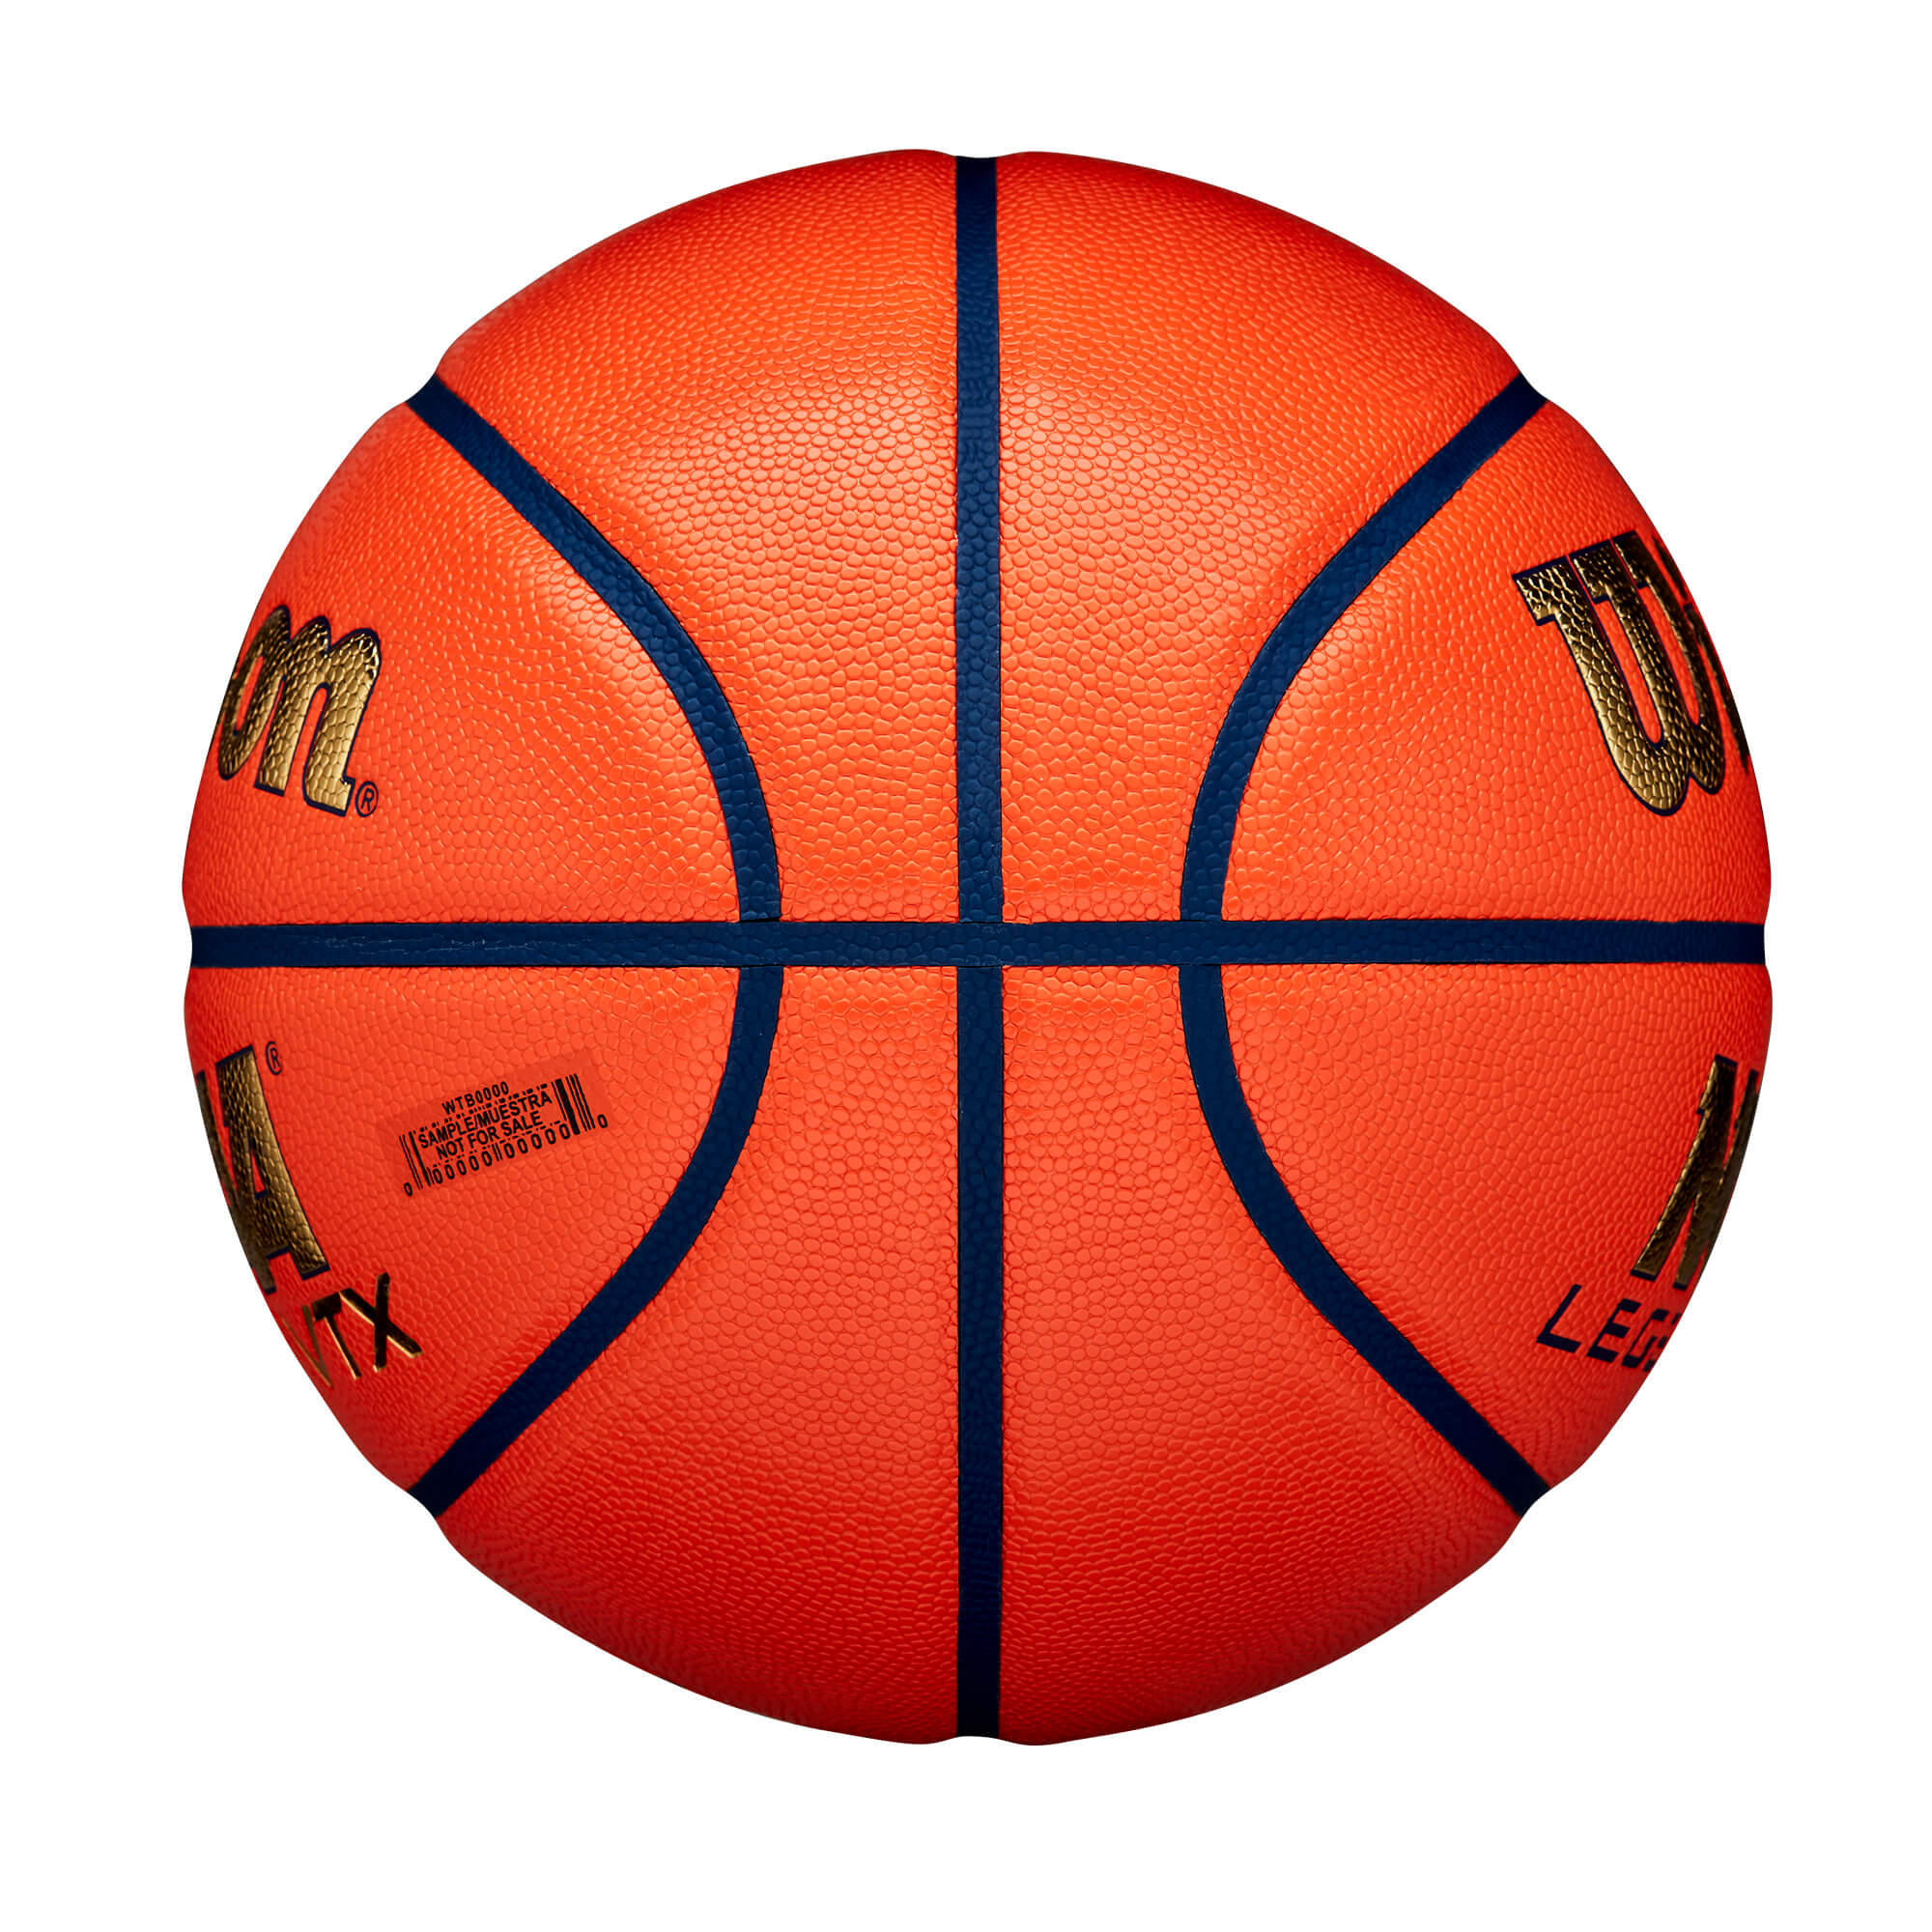 Ballons de basket NCAA Legend VTX